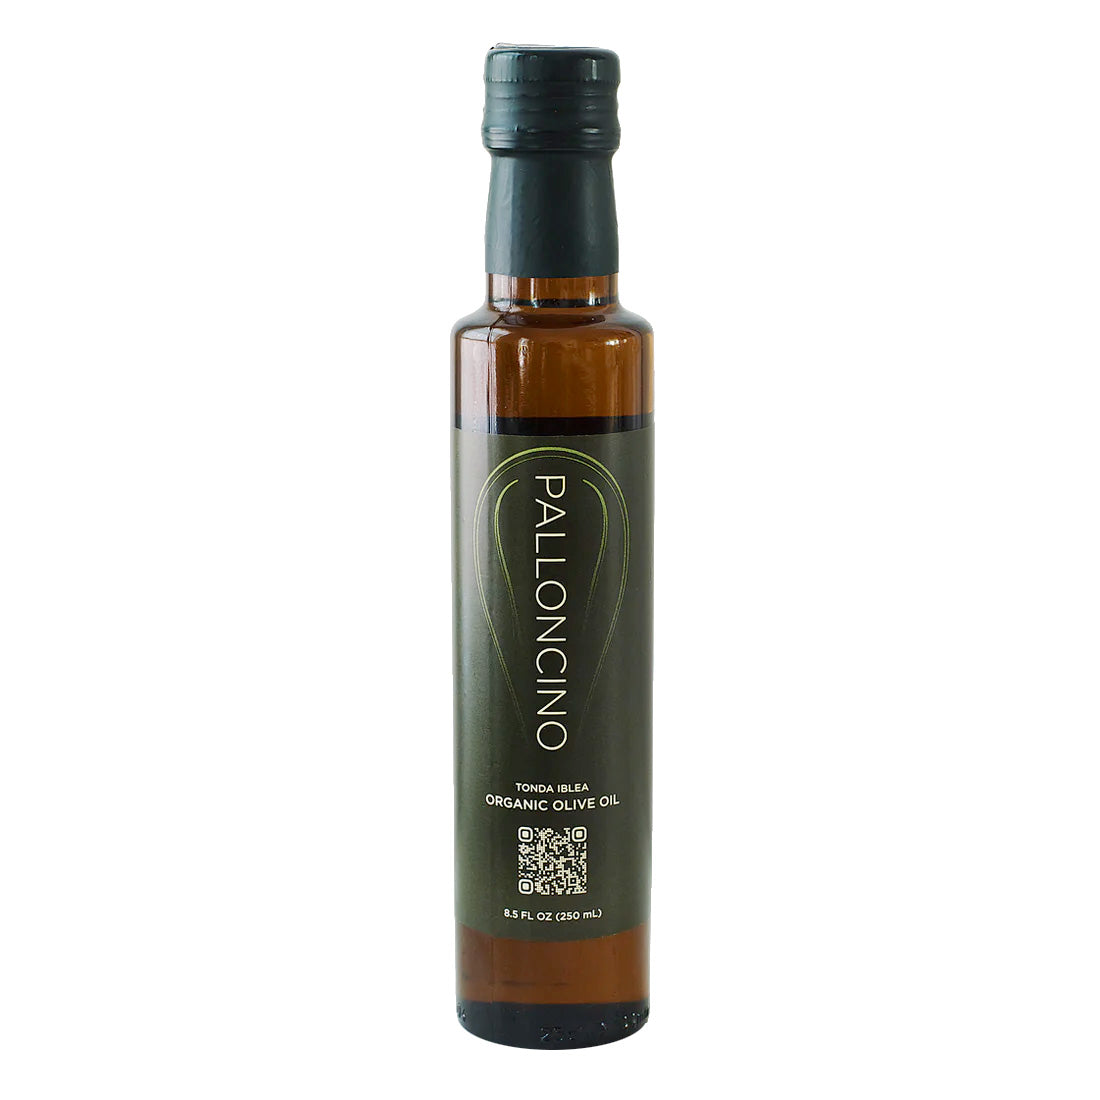 Palloncino Tonda Iblea Organic Olive Oil